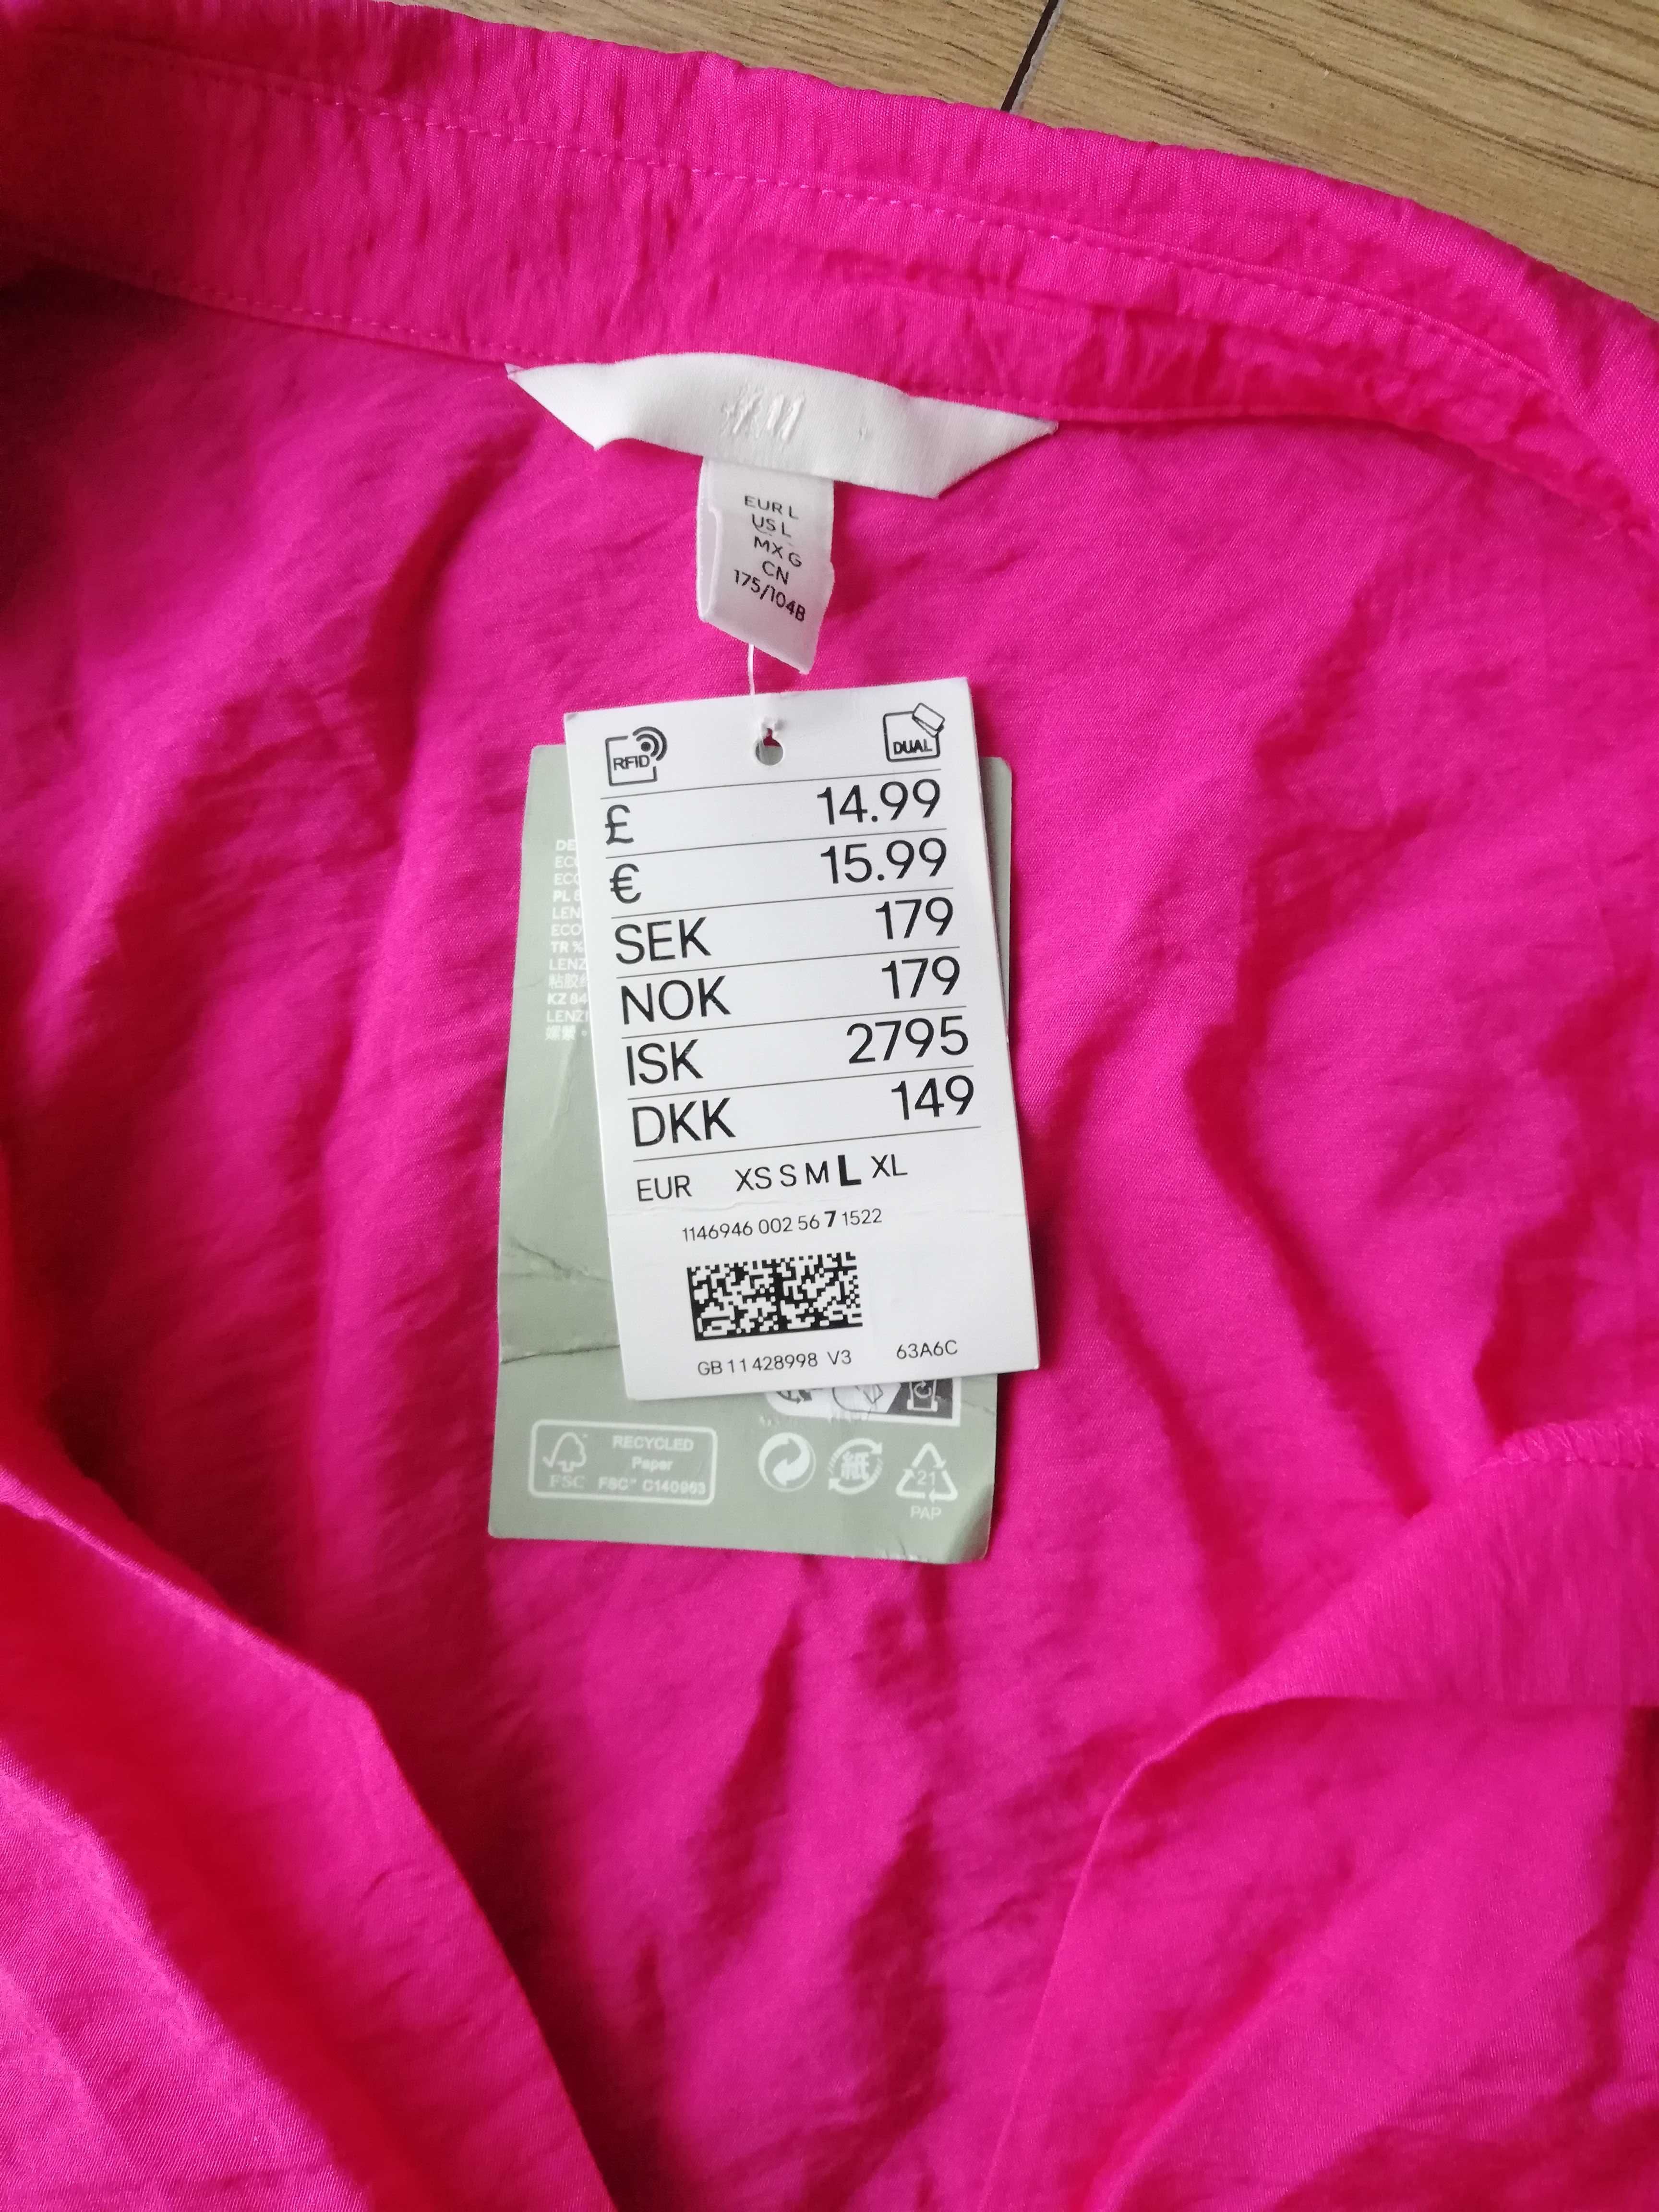 Koszula bluzka różowa H&M 38-40 rozmiar M L